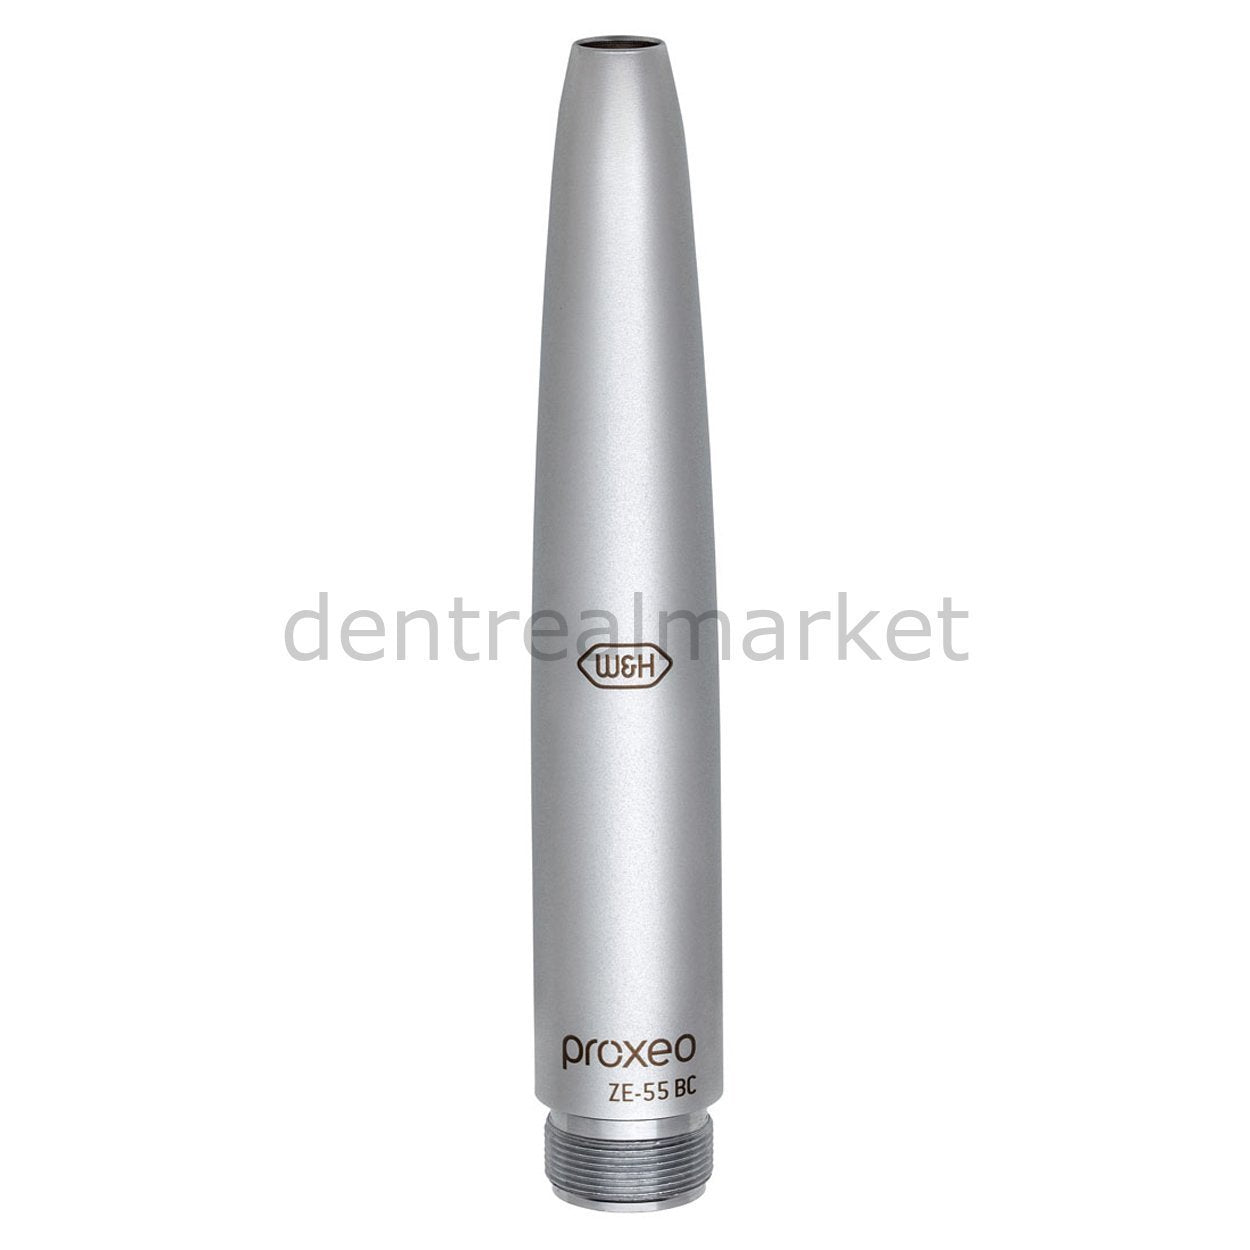 DentrealStore - W&H Dental Proxeo Air Scaler ZE-55 BC - Air Cavitron